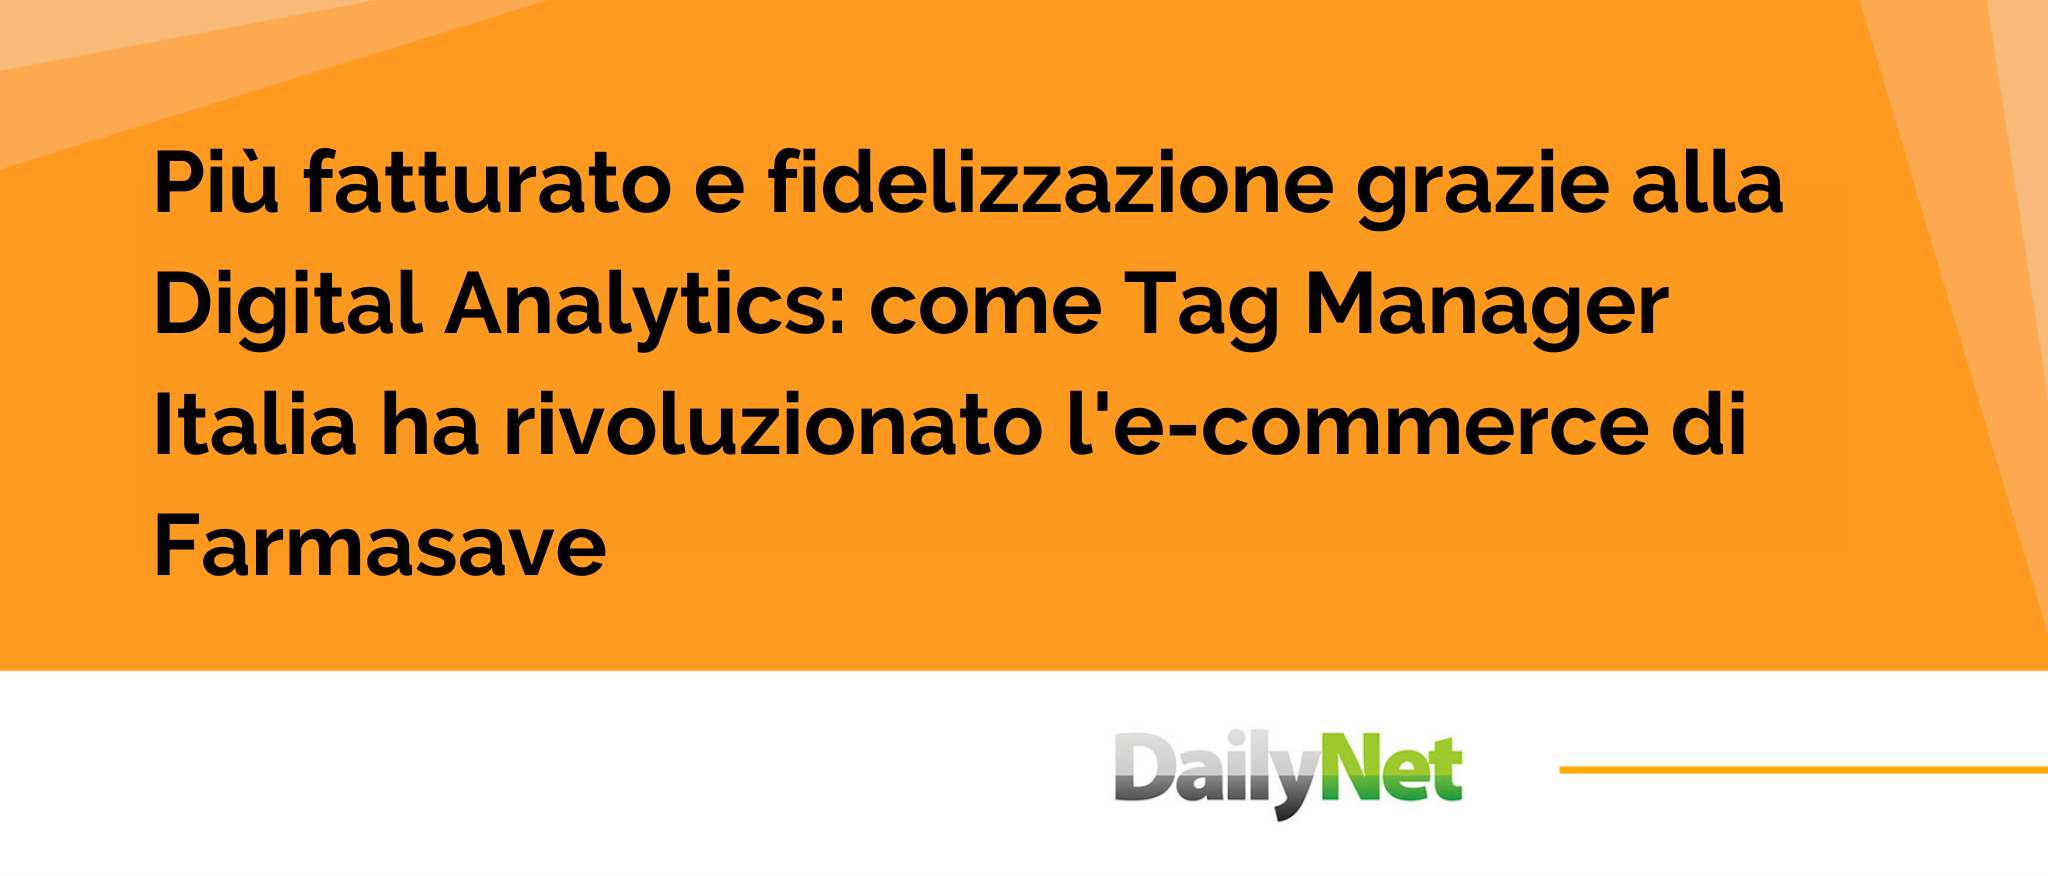 News DailyNet su caso studio Tag Manager Italia ed ecommerce Farmasave